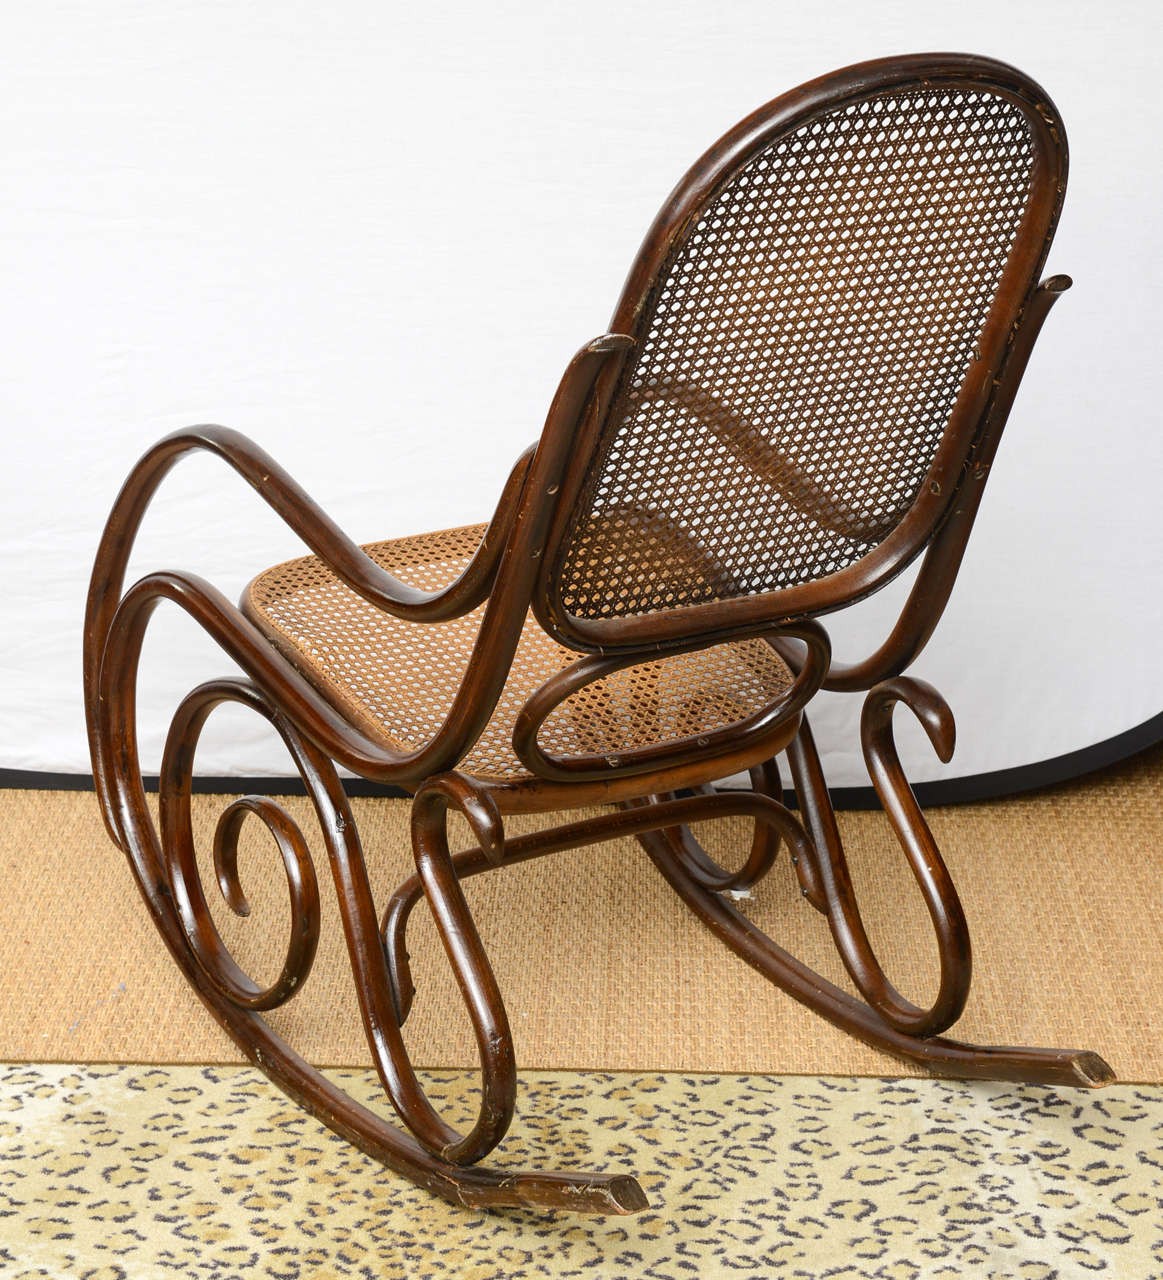 Vintage thonet bentwood rocking chair at 1stdibs